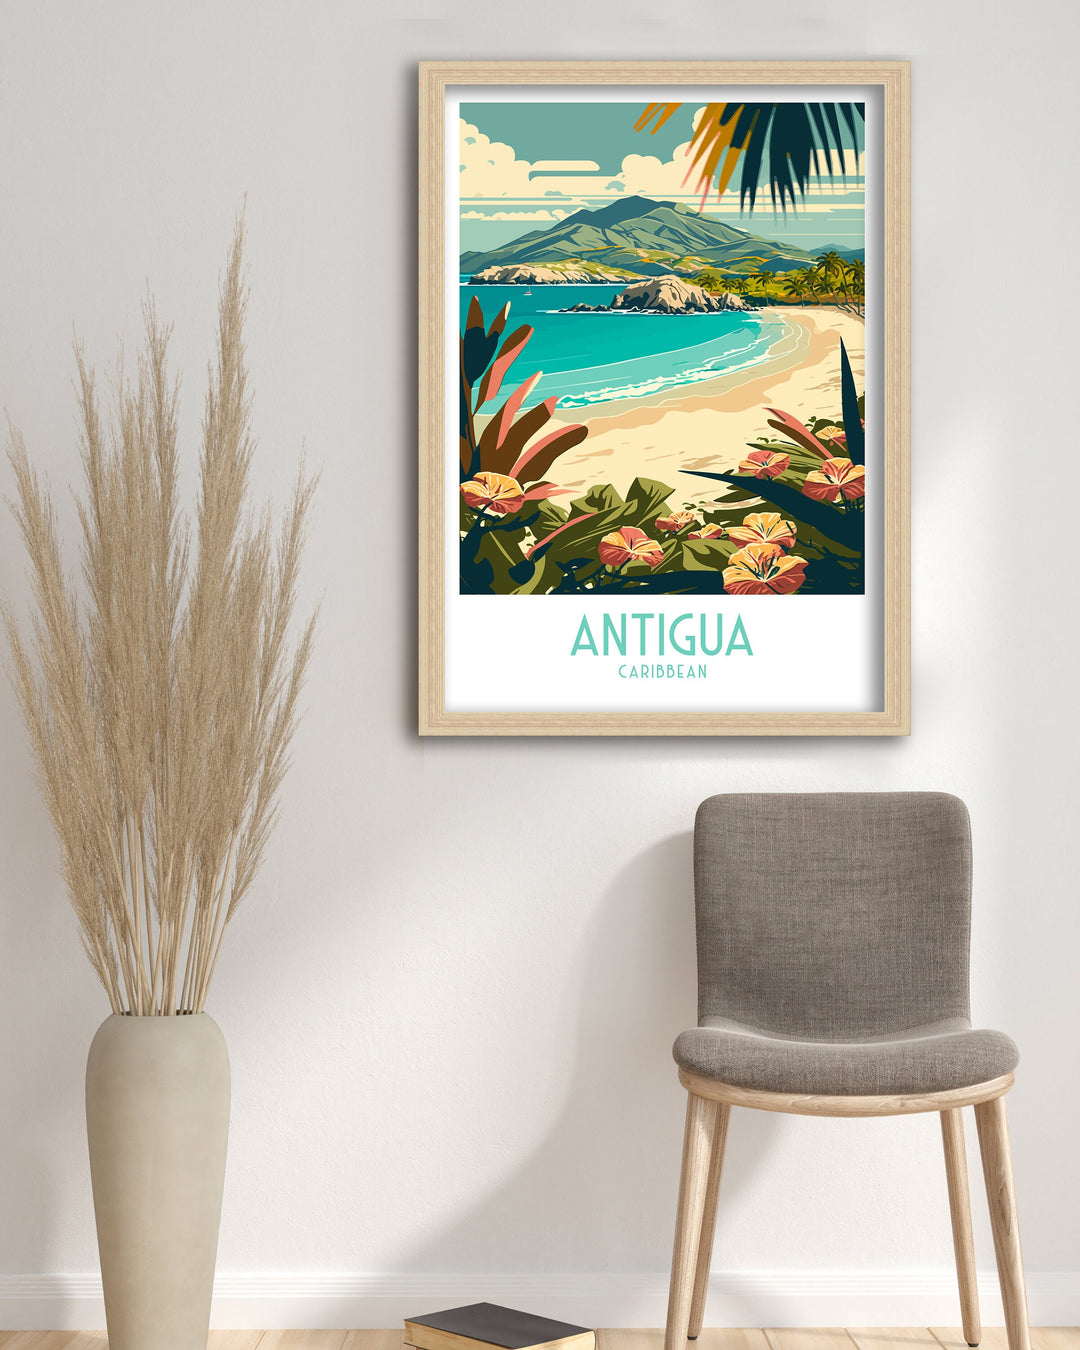 Antigua Travel Print  | Travel Print | Antigua Poster | Antigua | Travel Poster | Antigua Art | Antigua Wall Art | Travel Prints | Caribbean